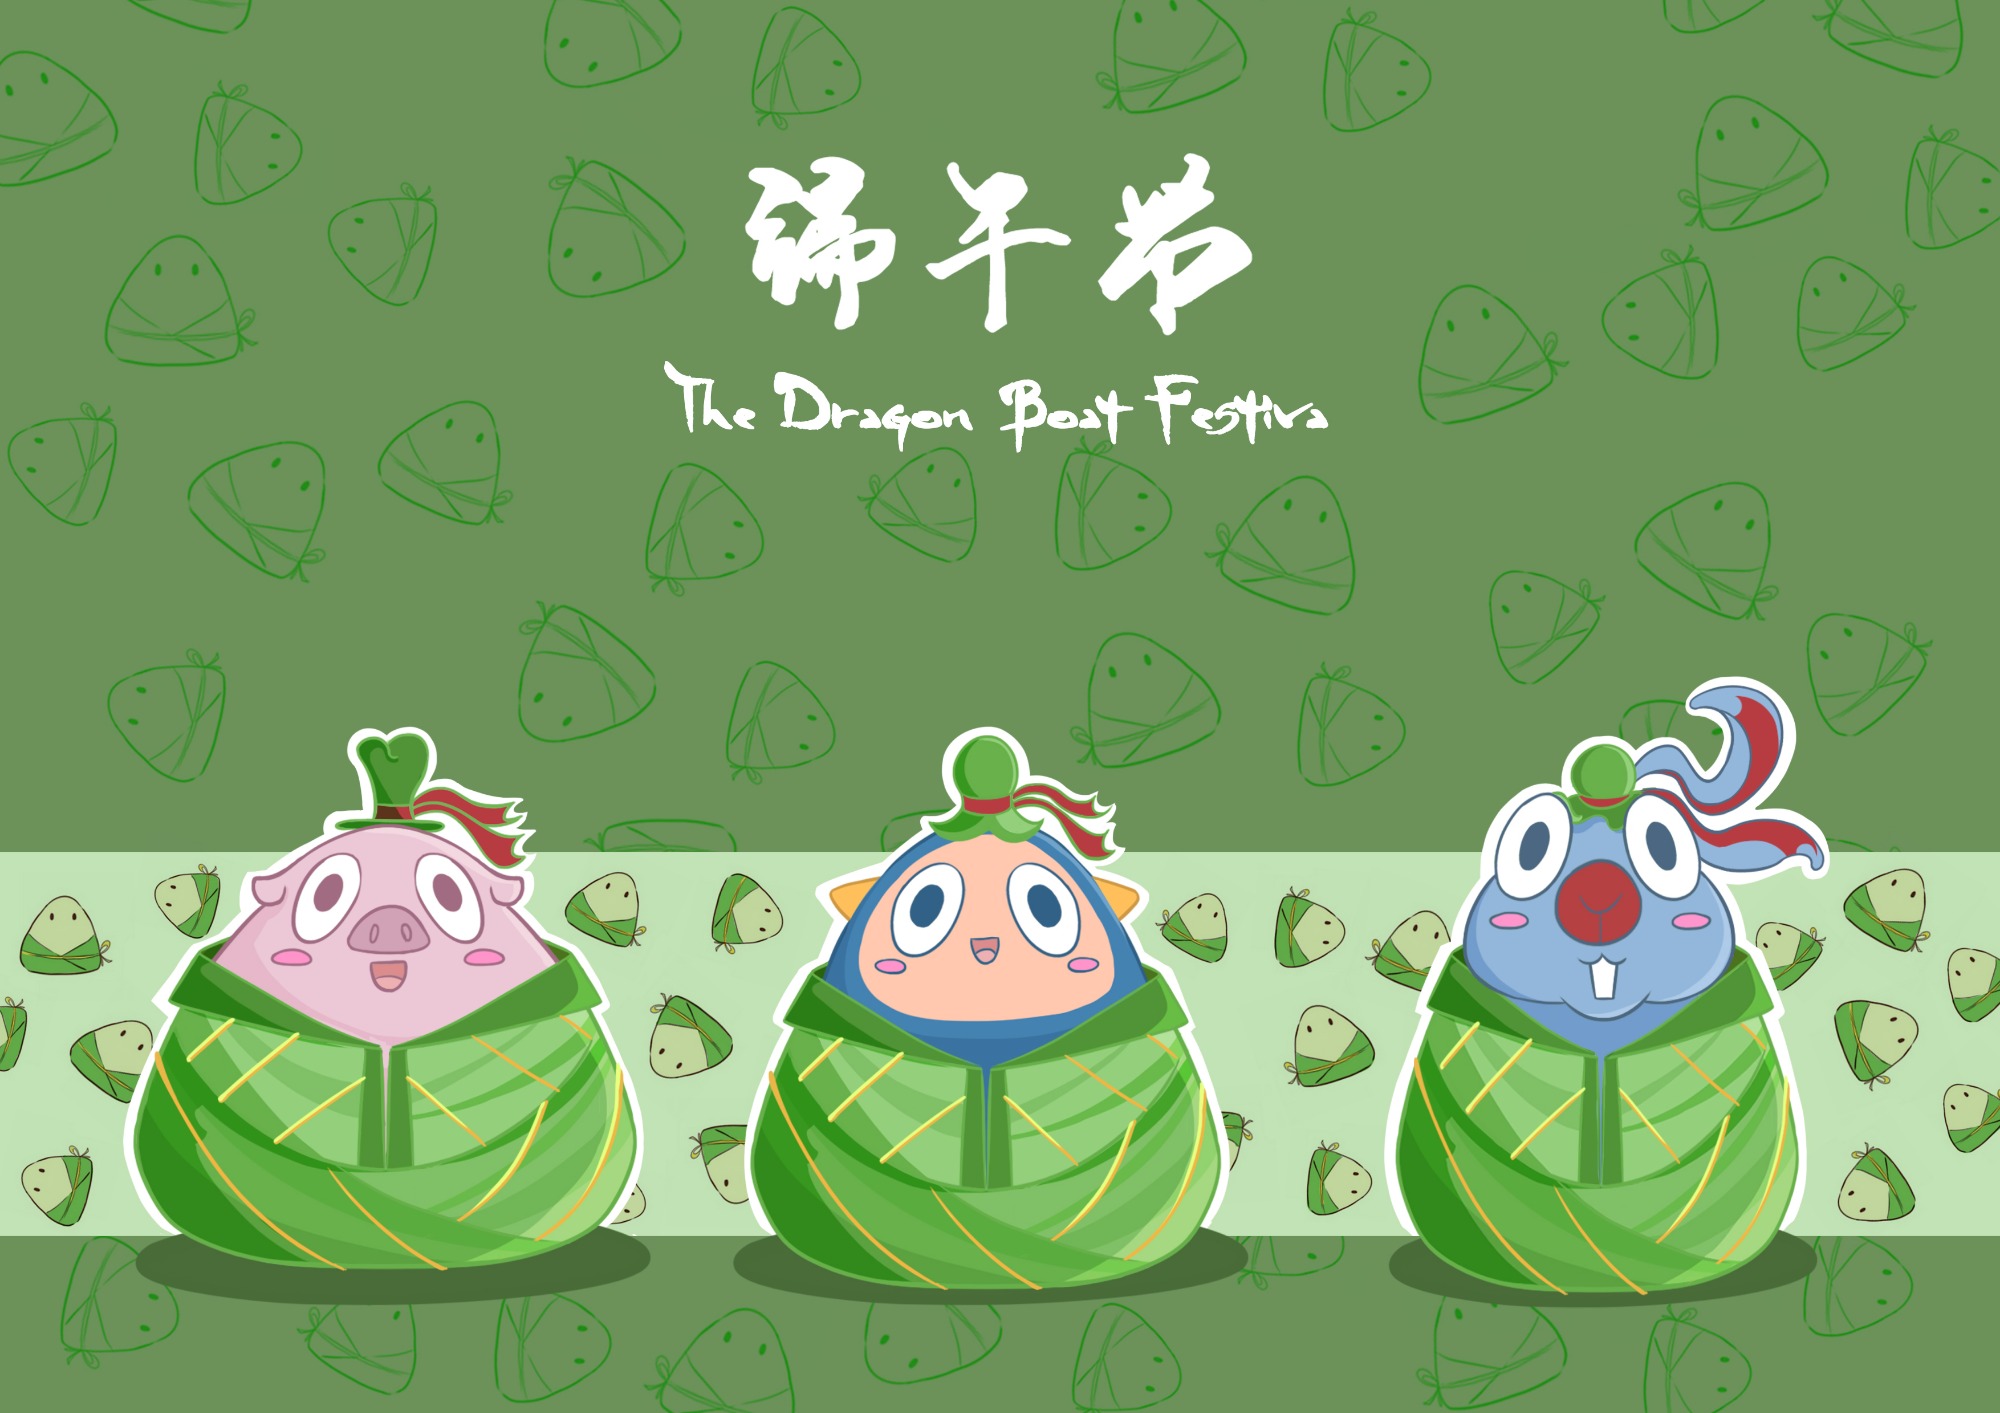 Wish: Dragon Boat Festival is happy!